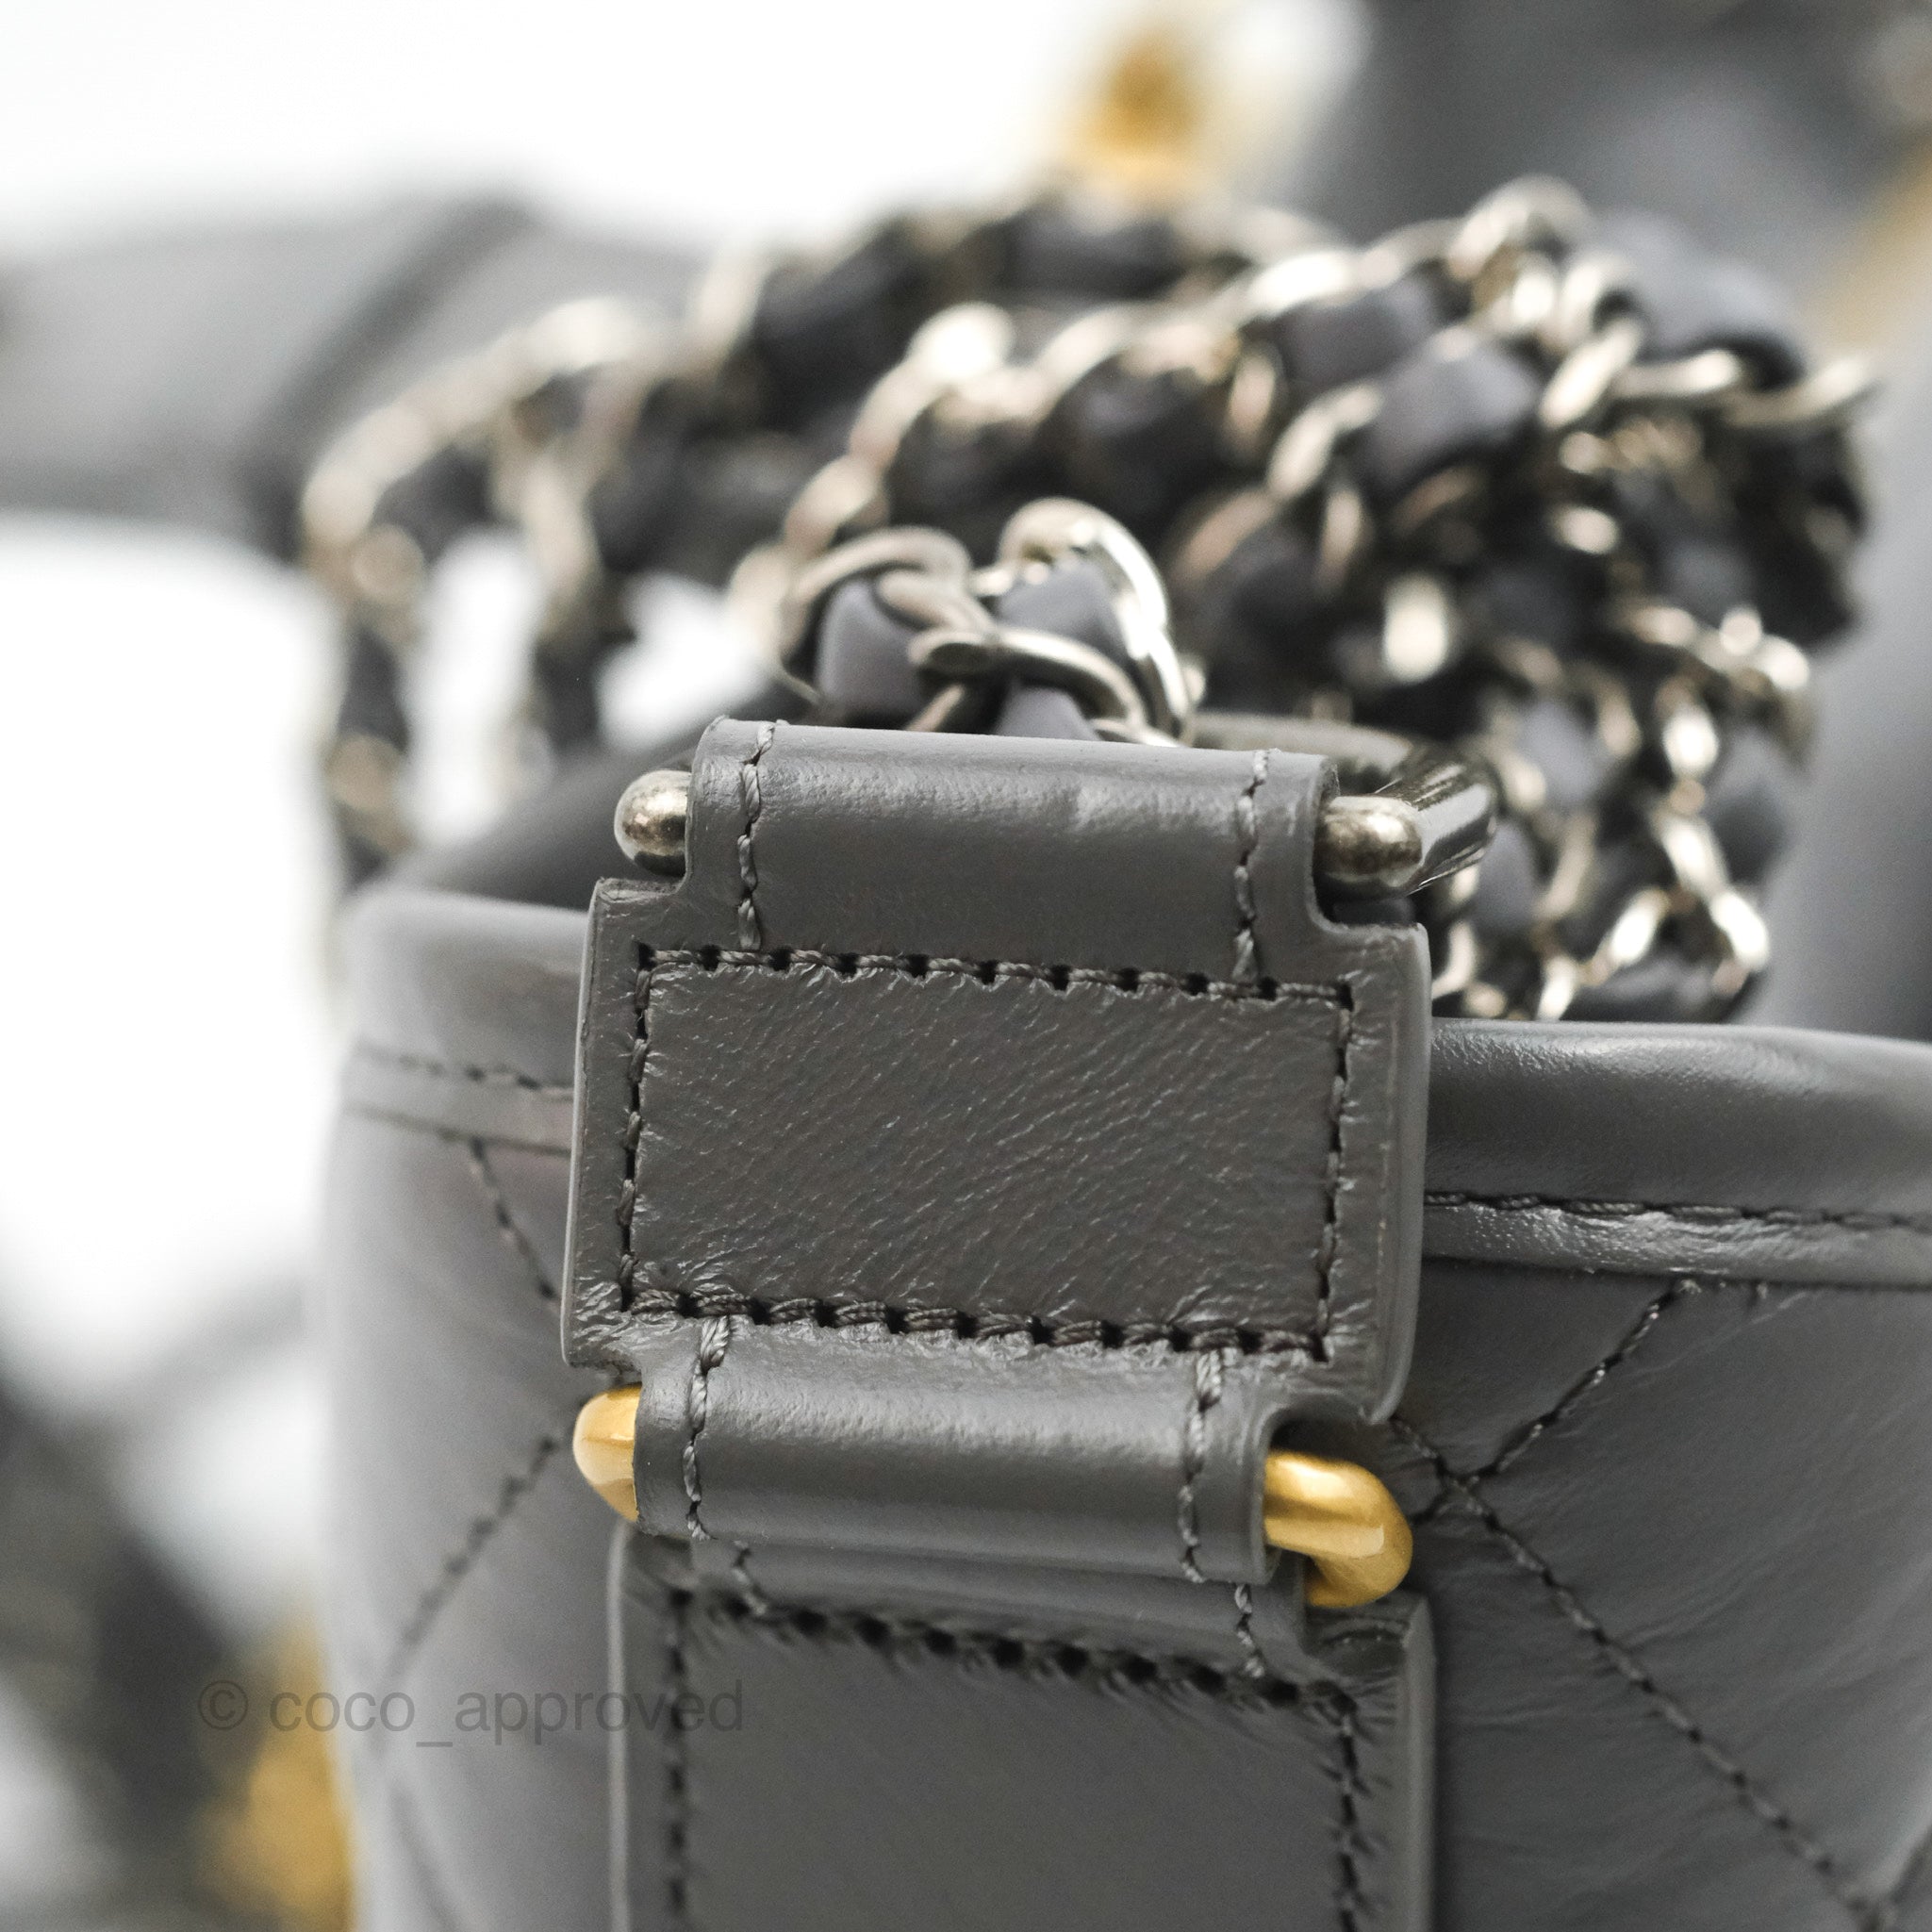 Chanel Calfskin Chevron Small Gabrielle Hobo Grey Mixed Hardware – Coco  Approved Studio